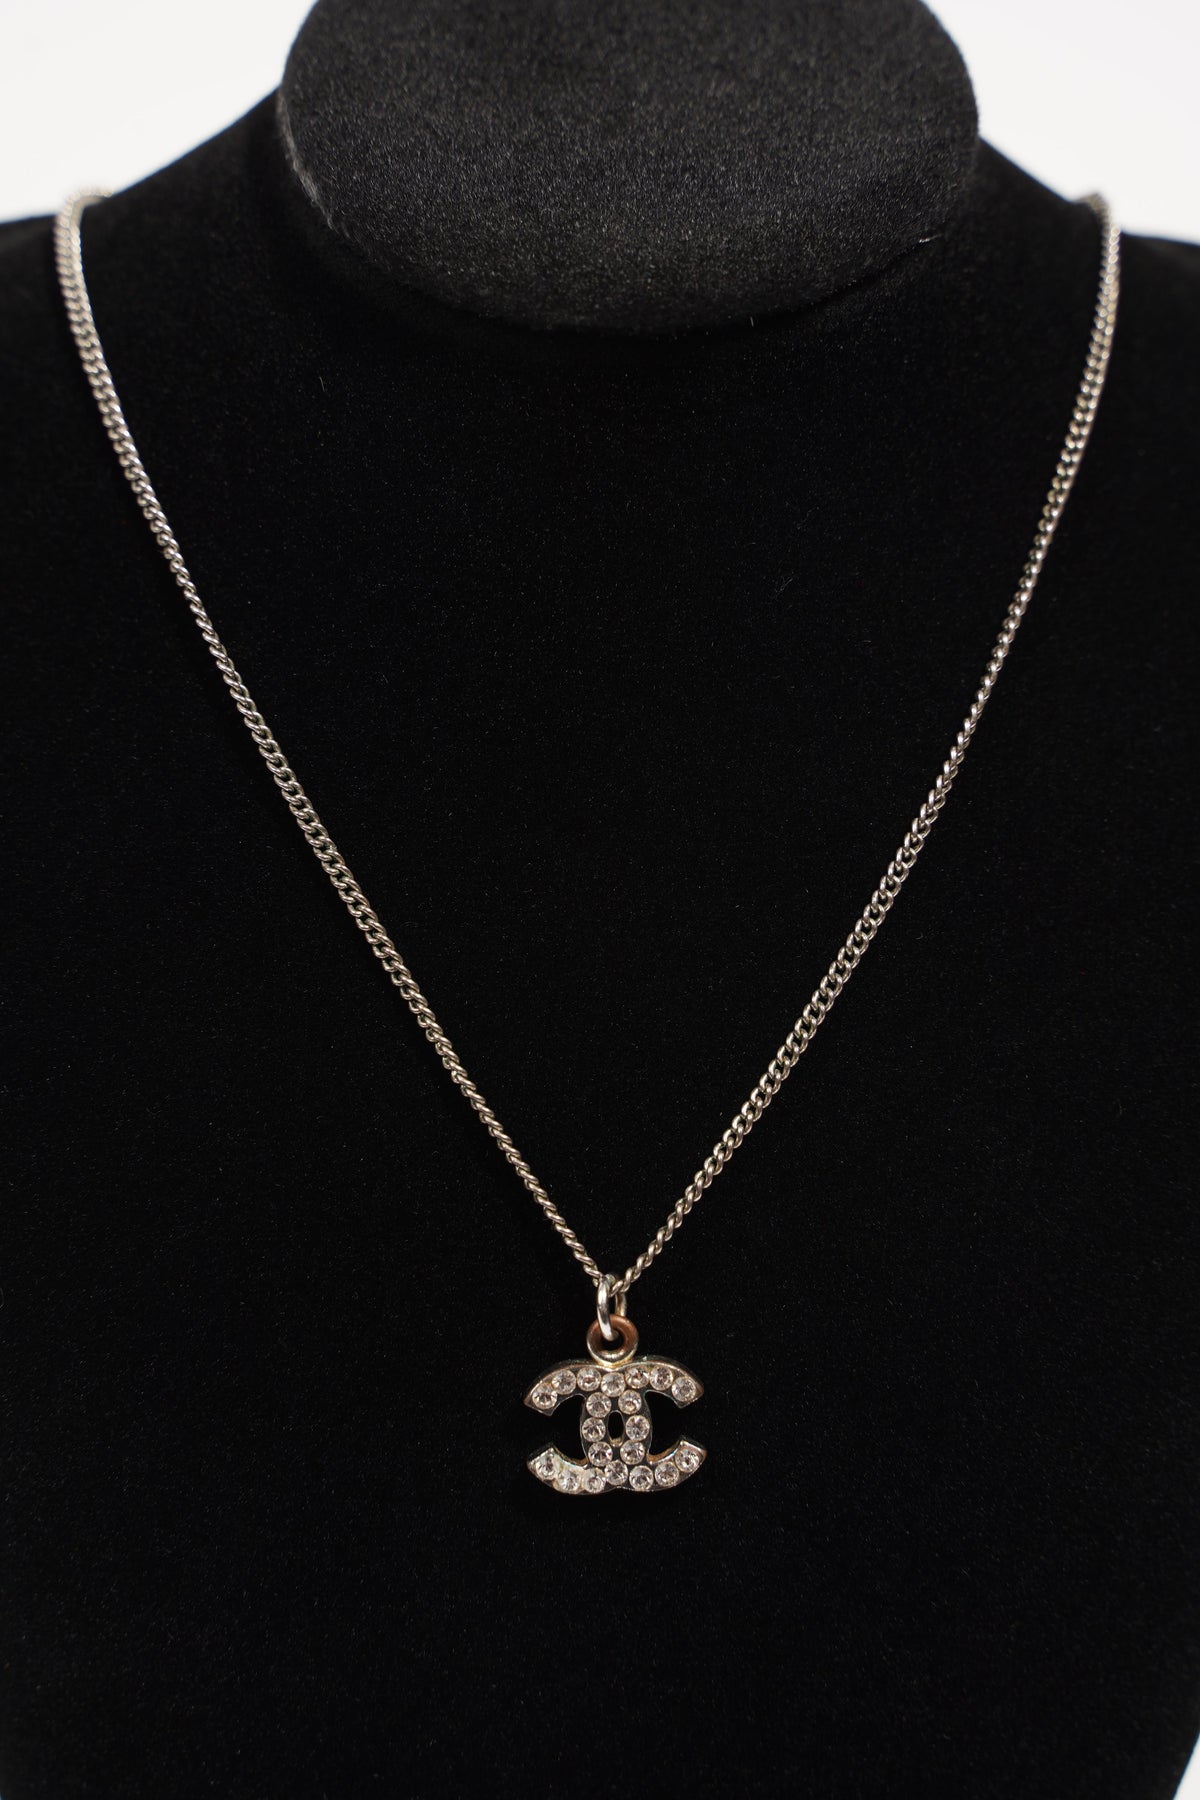 Authentic RARE Chanel CC B11V logo classic timeless crystal necklace box  tag  eBay